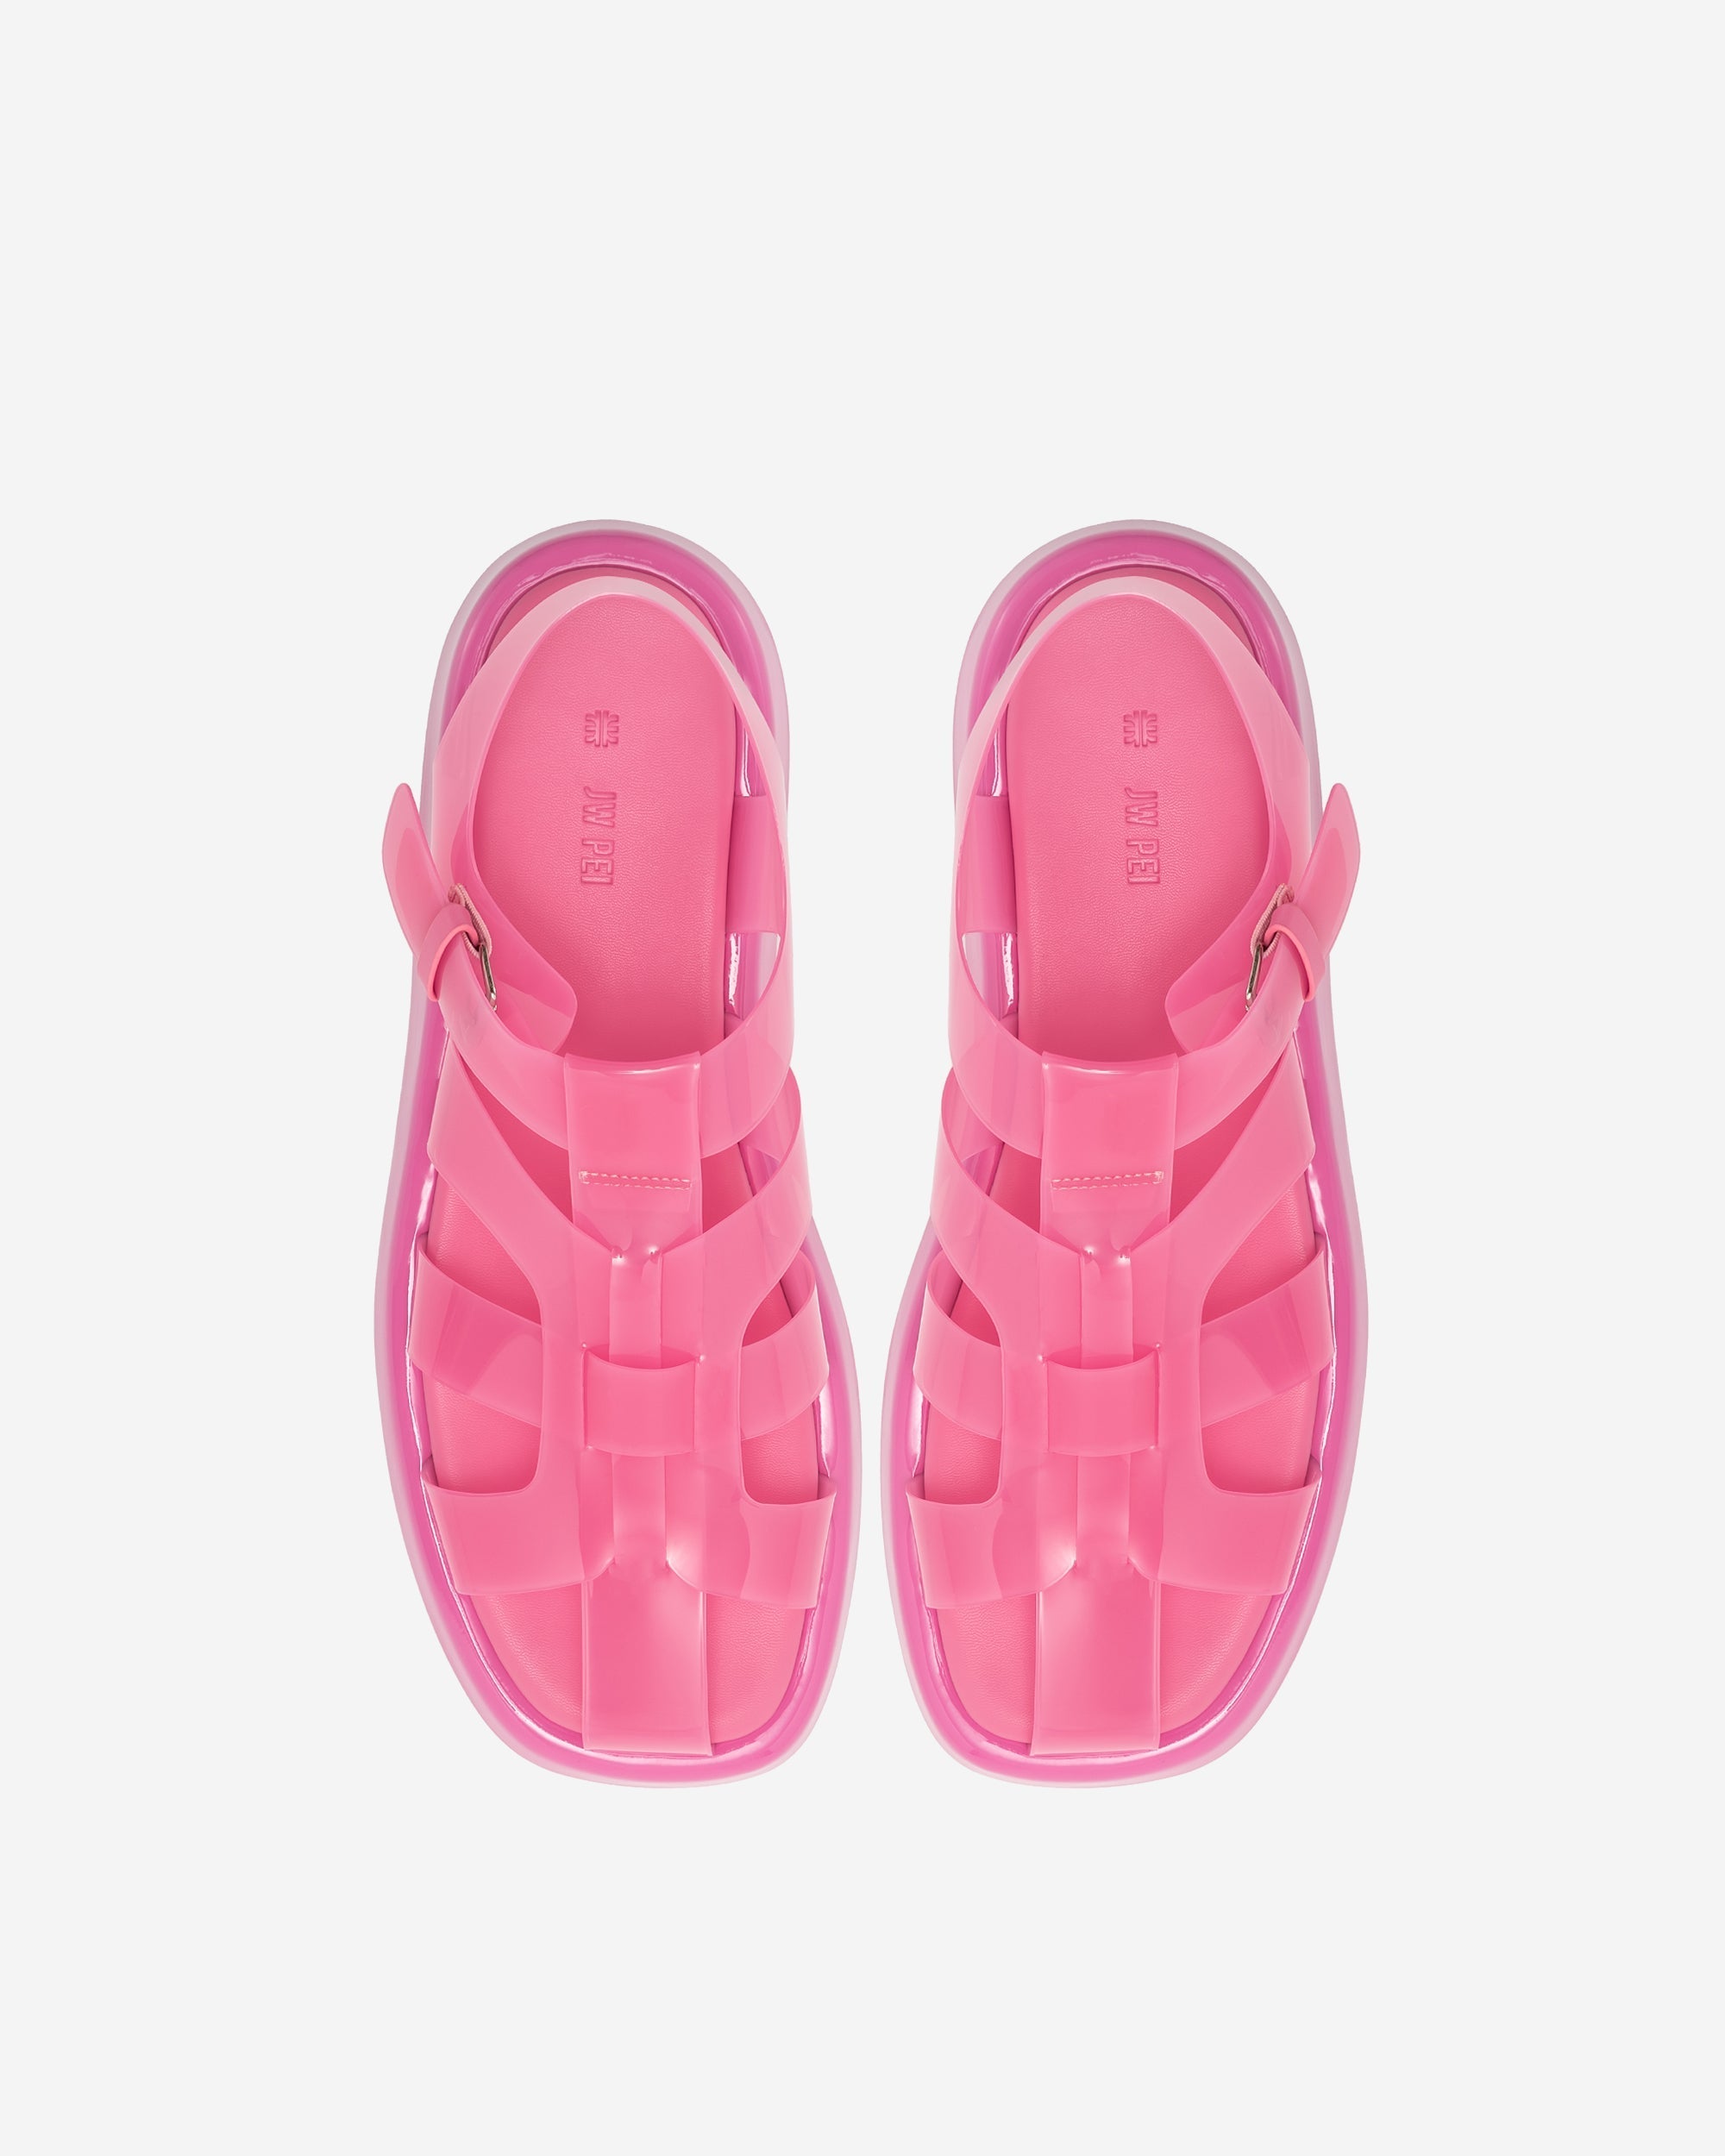 Piper 厚底涼鞋 - 粉色